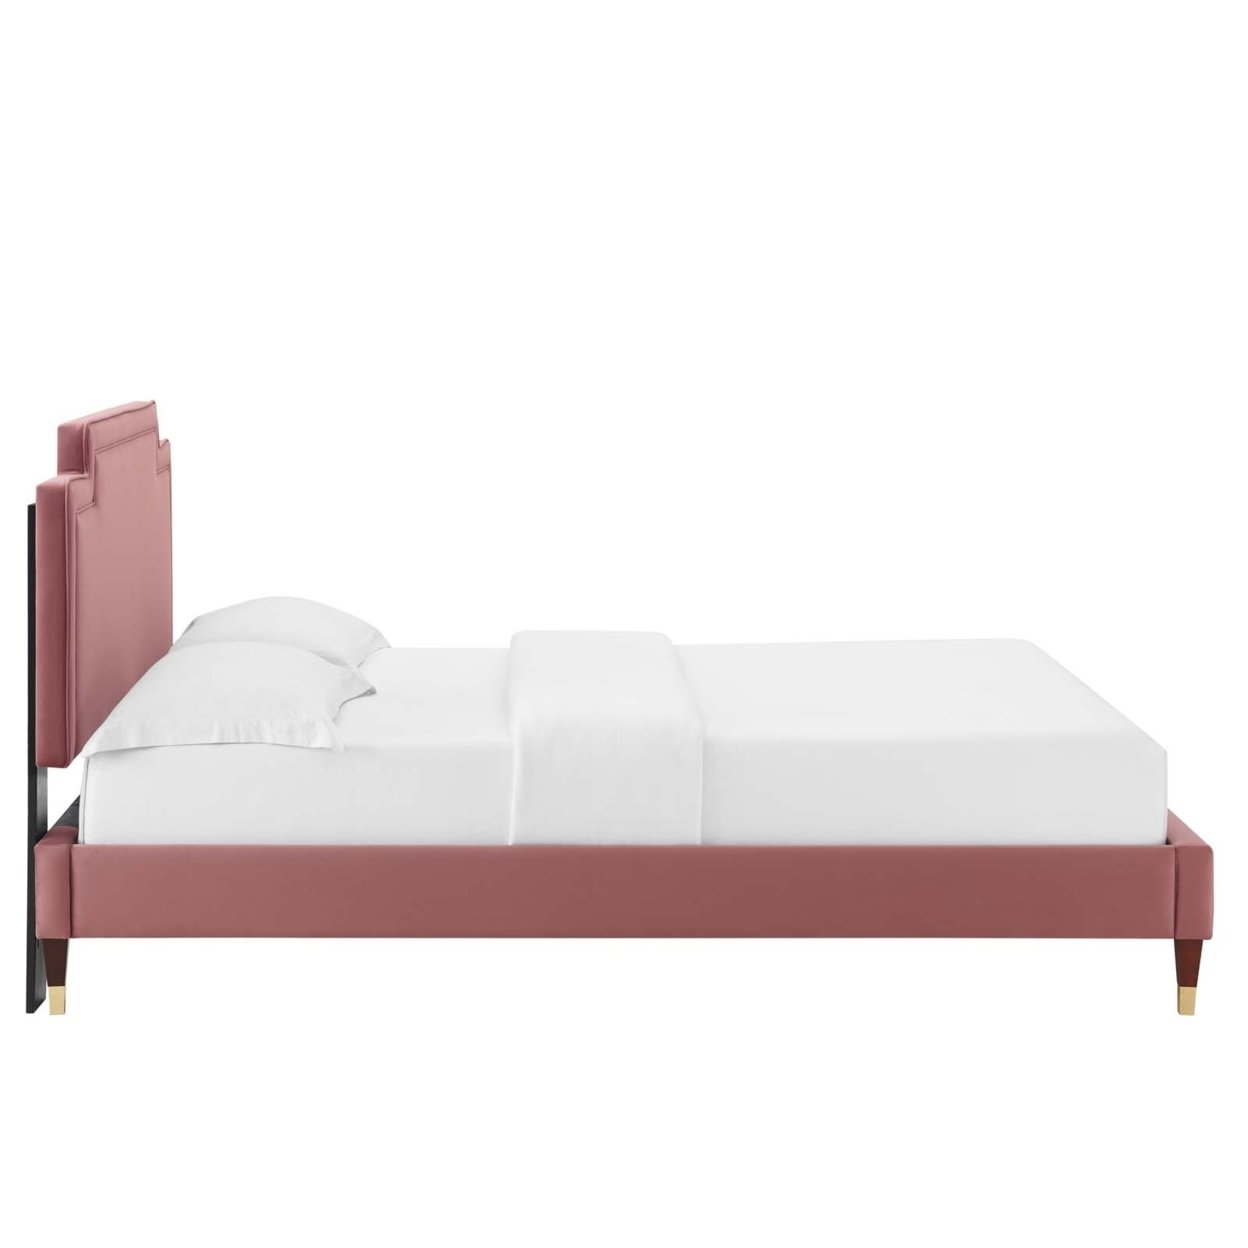 Full Bed, Dusty Pink Velvet, Geometric Headboard, Wood Legs